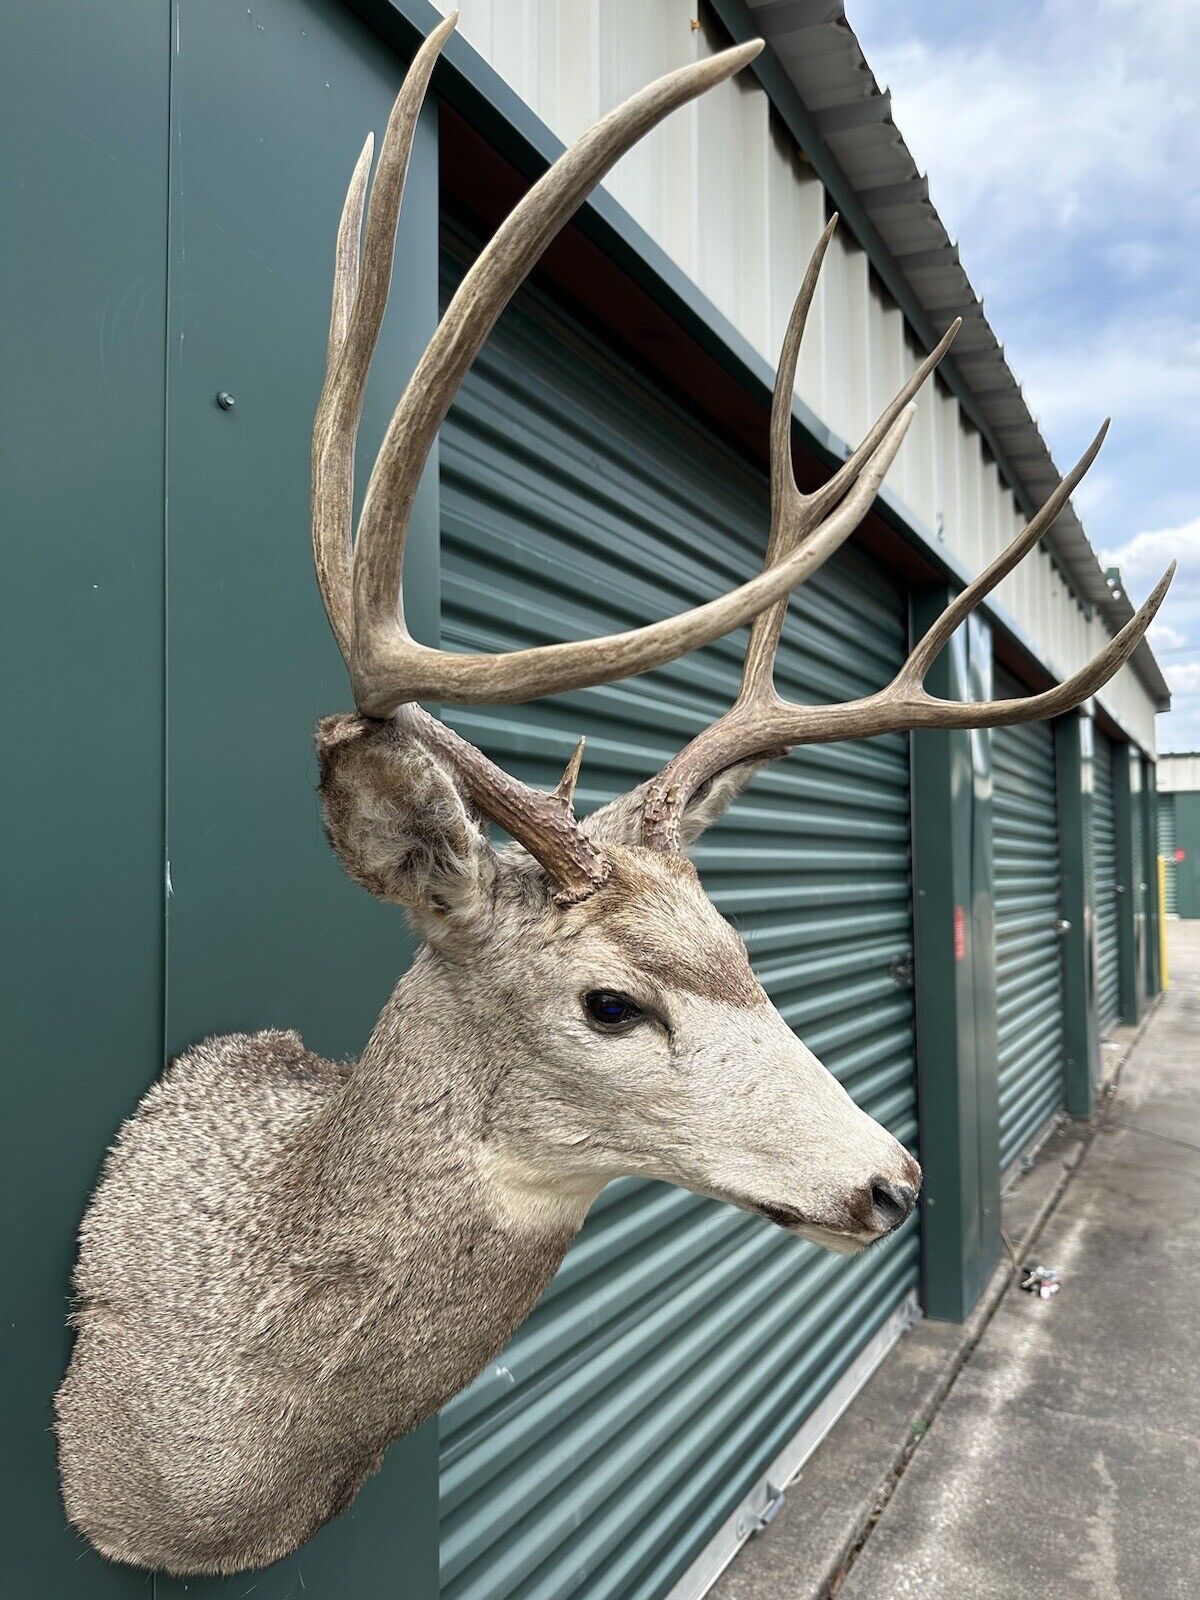 Deer Head Mount Taxidermy Antler  Log Cabin Decor Hunt Horn